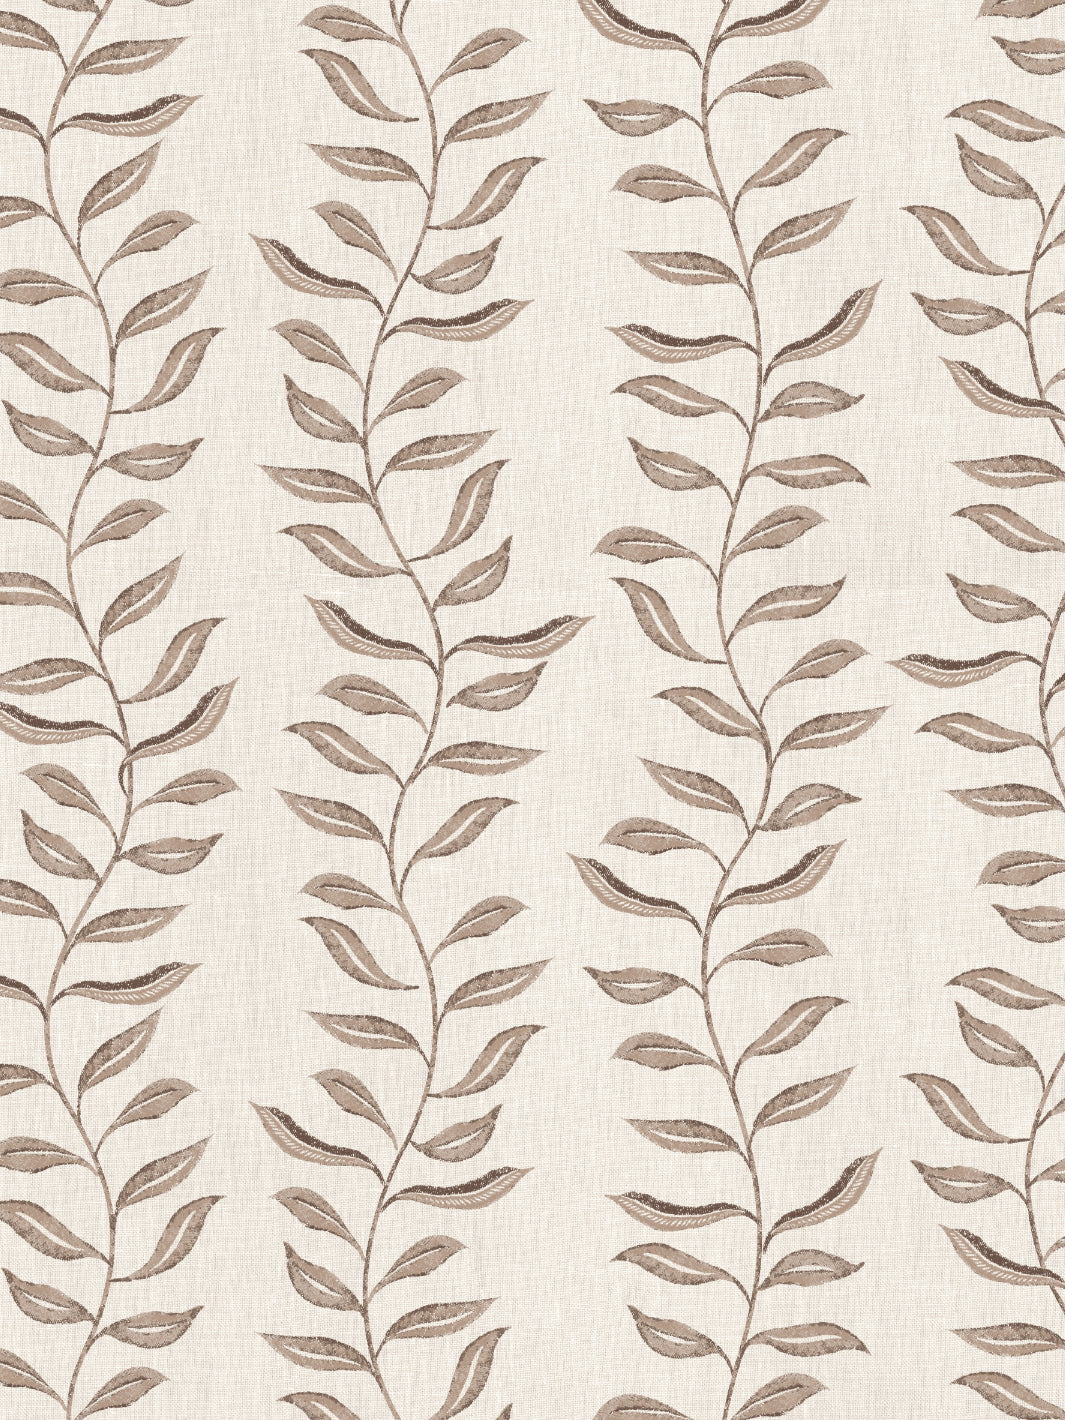 'Seneca' Linen Fabric by Nathan Turner - Brown